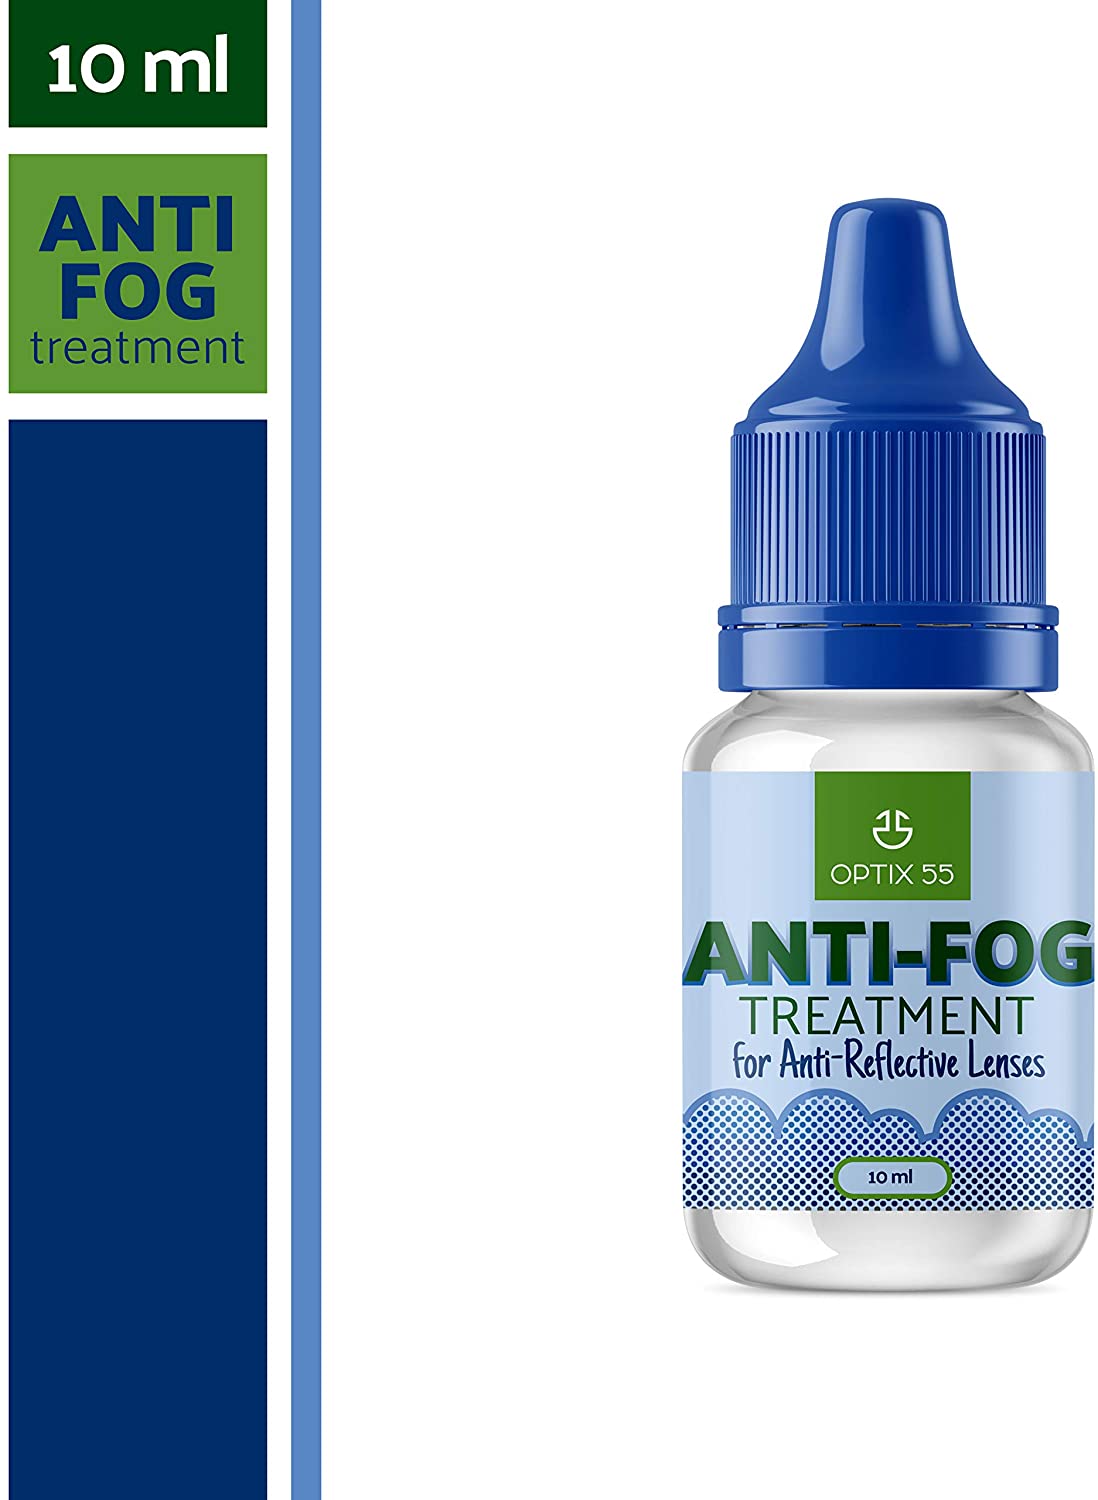 Anti-Fog Treatment for Anti-Reflective Lenses